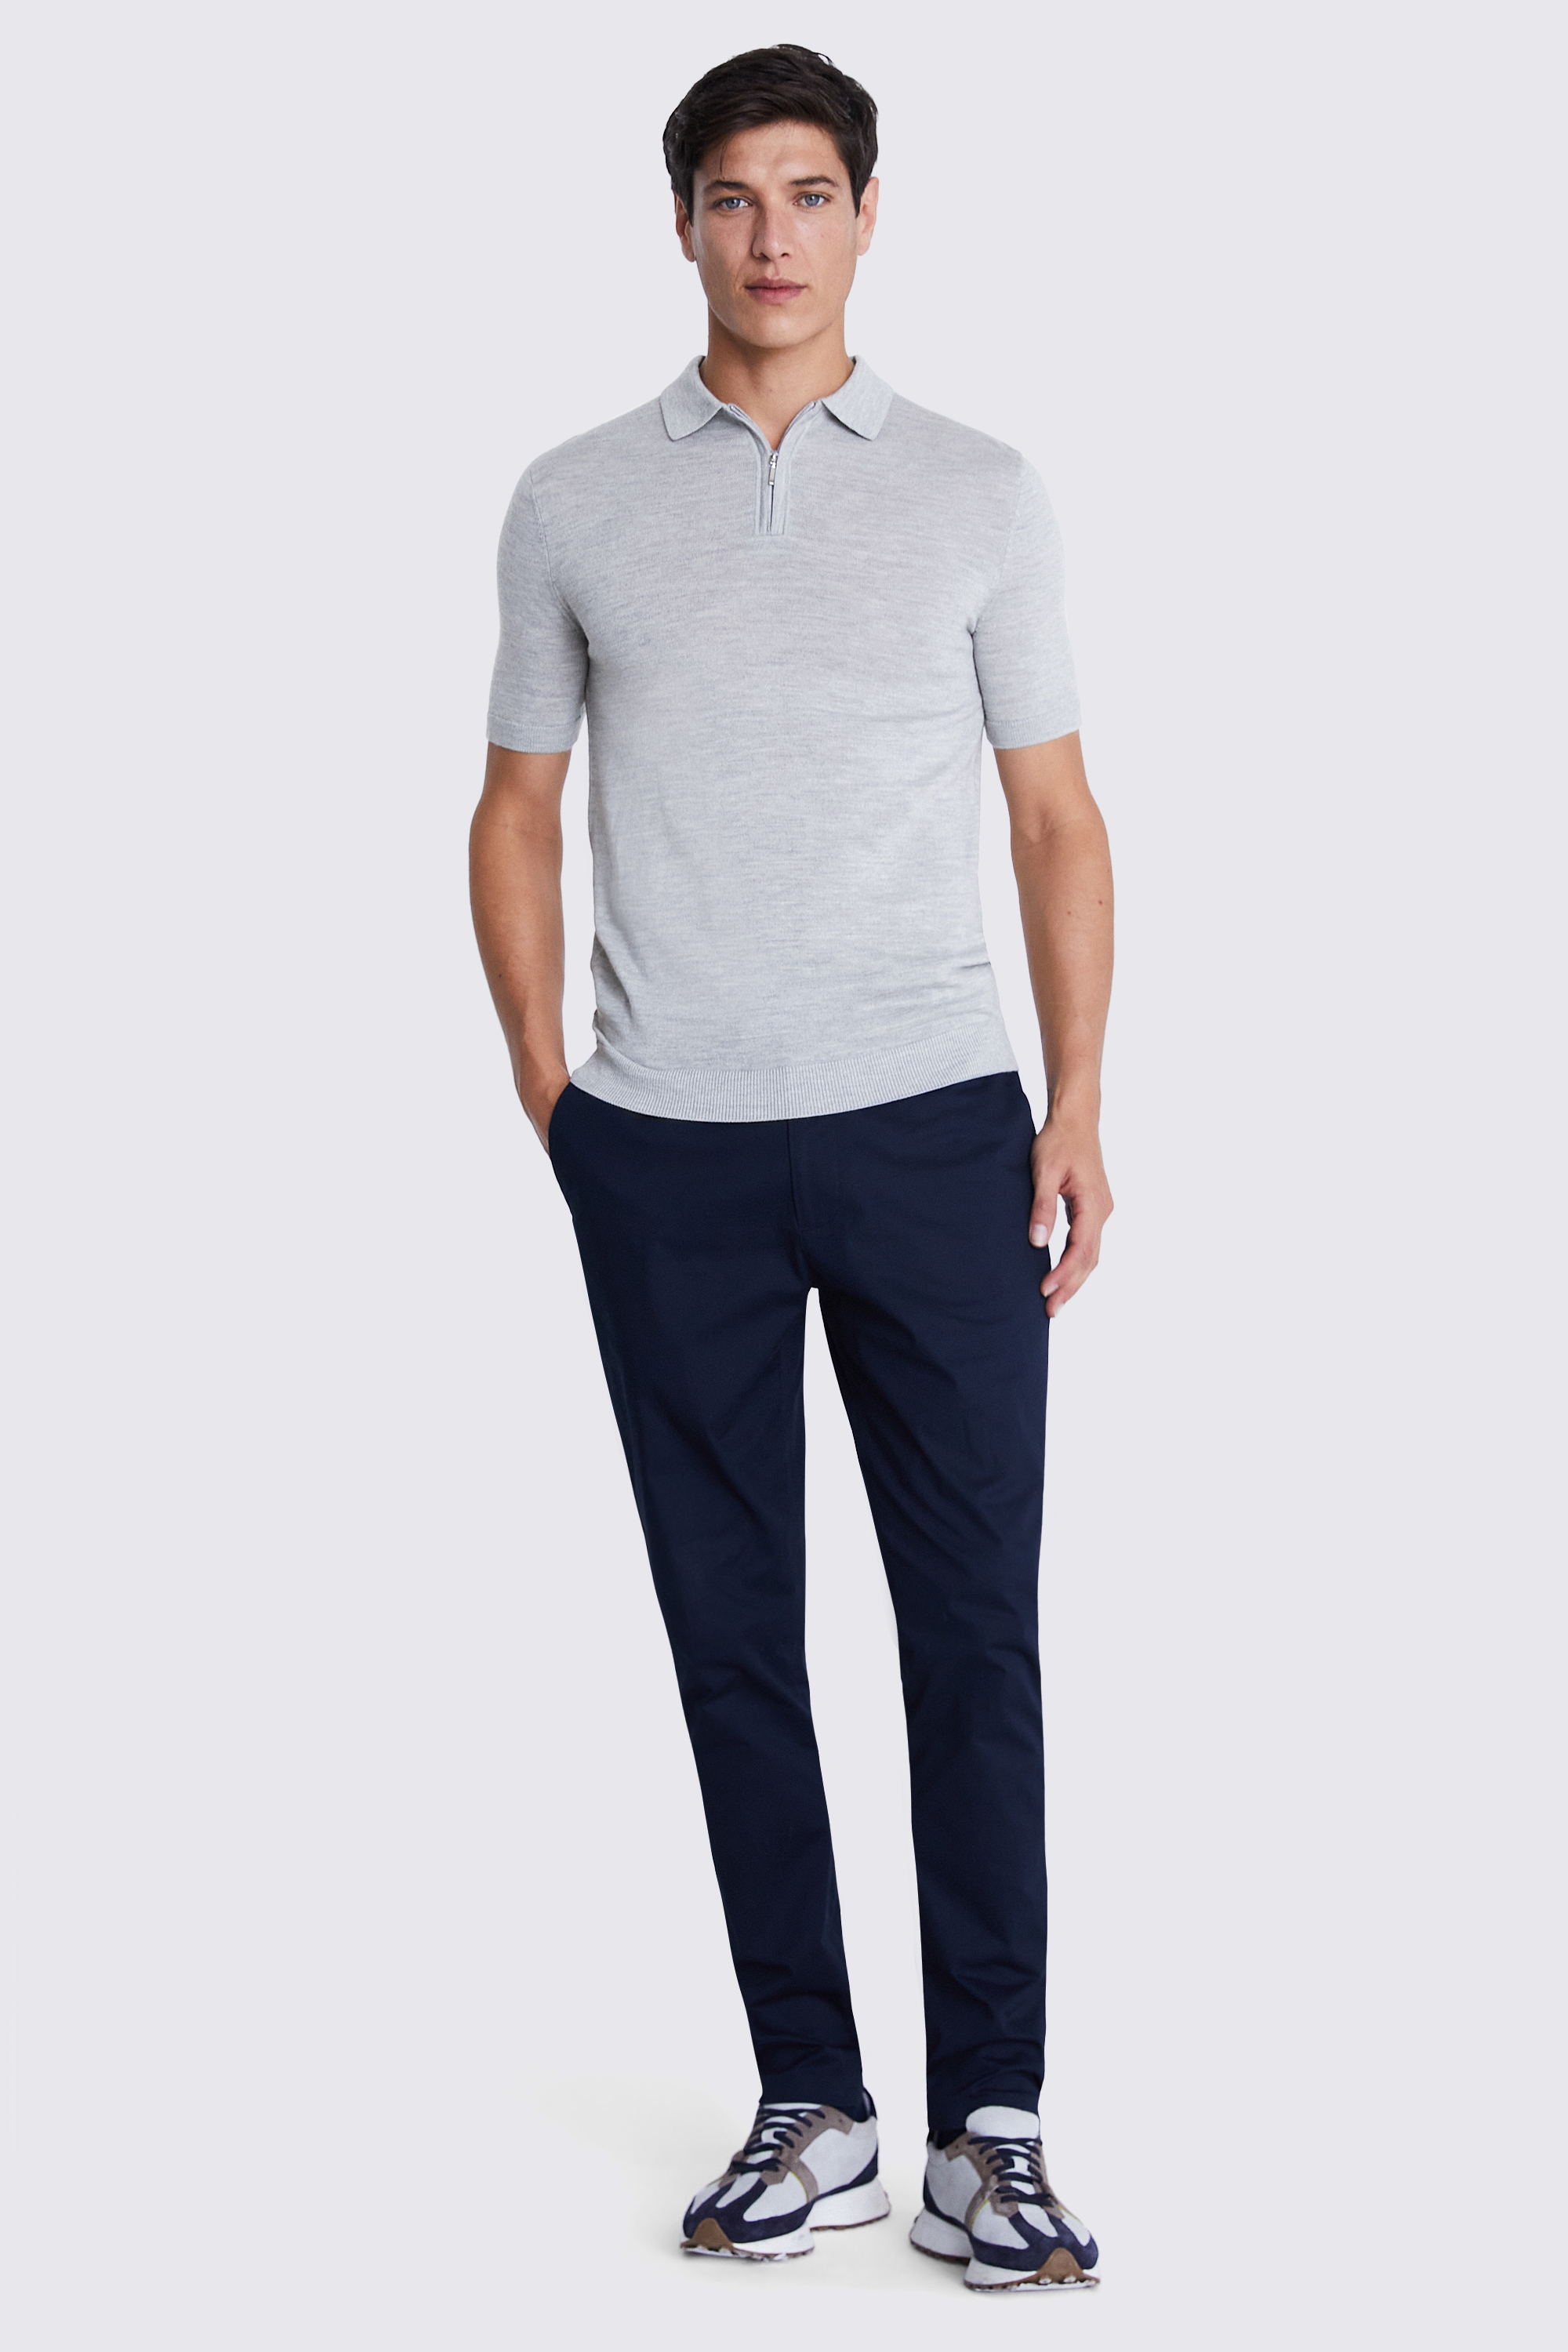 Light Grey Merino Quarter Zip Polo Shirt | Buy Online at Moss